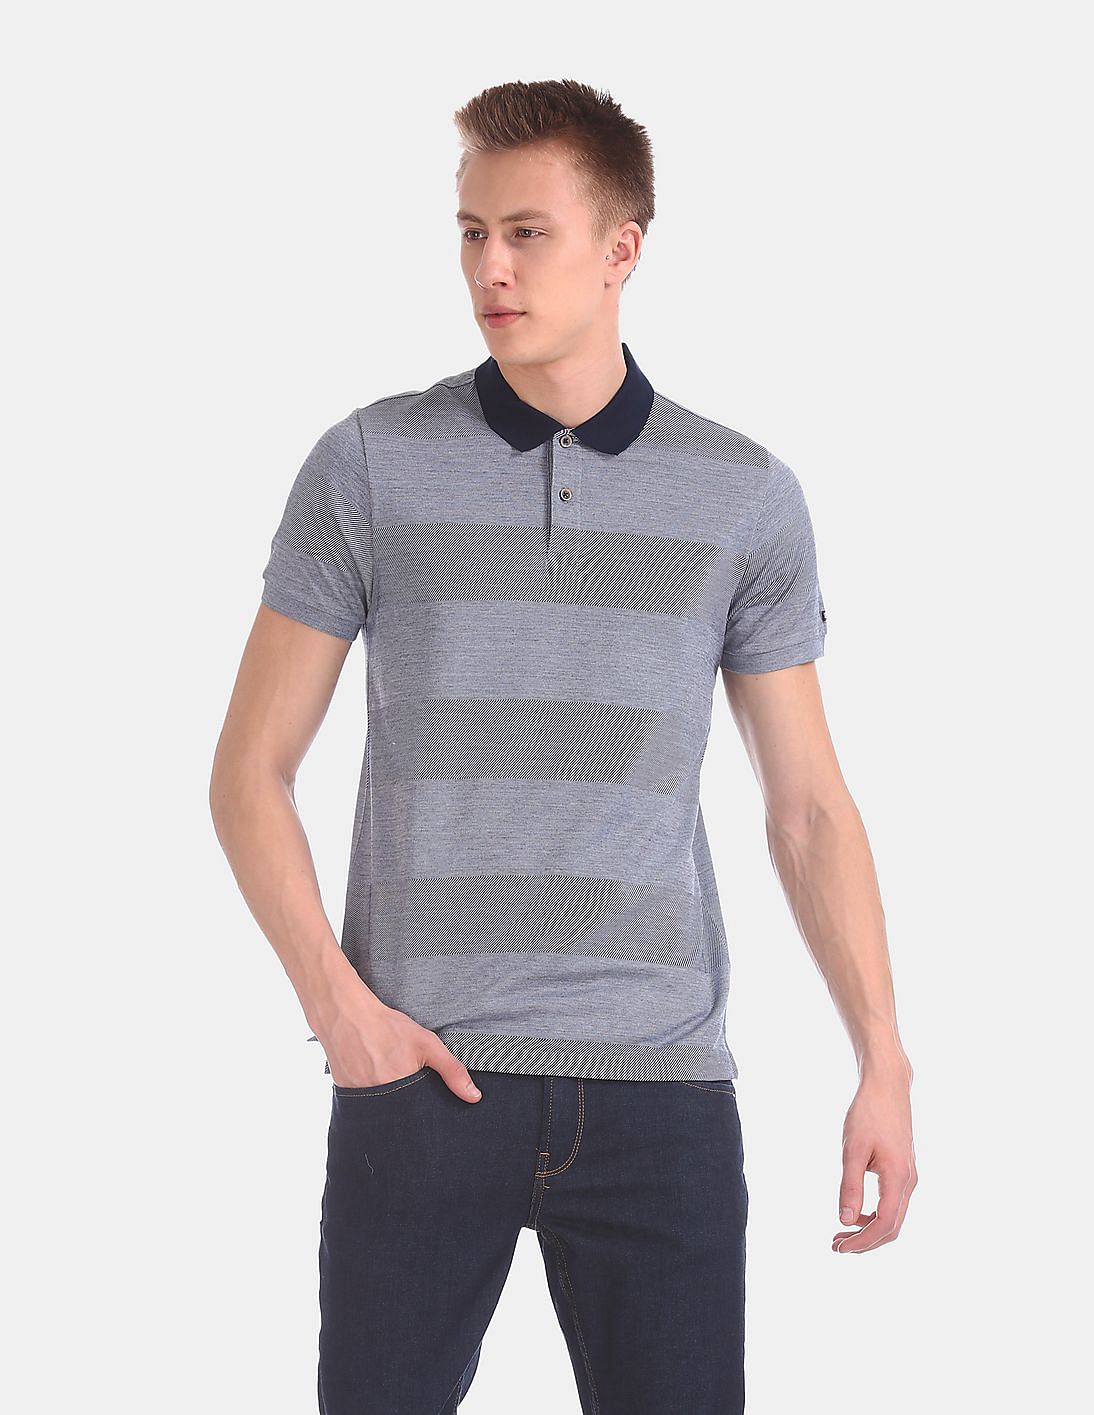 Buy Arrow Sports Patterned Stripe Short Sleeve Polo Shirt - NNNOW.com